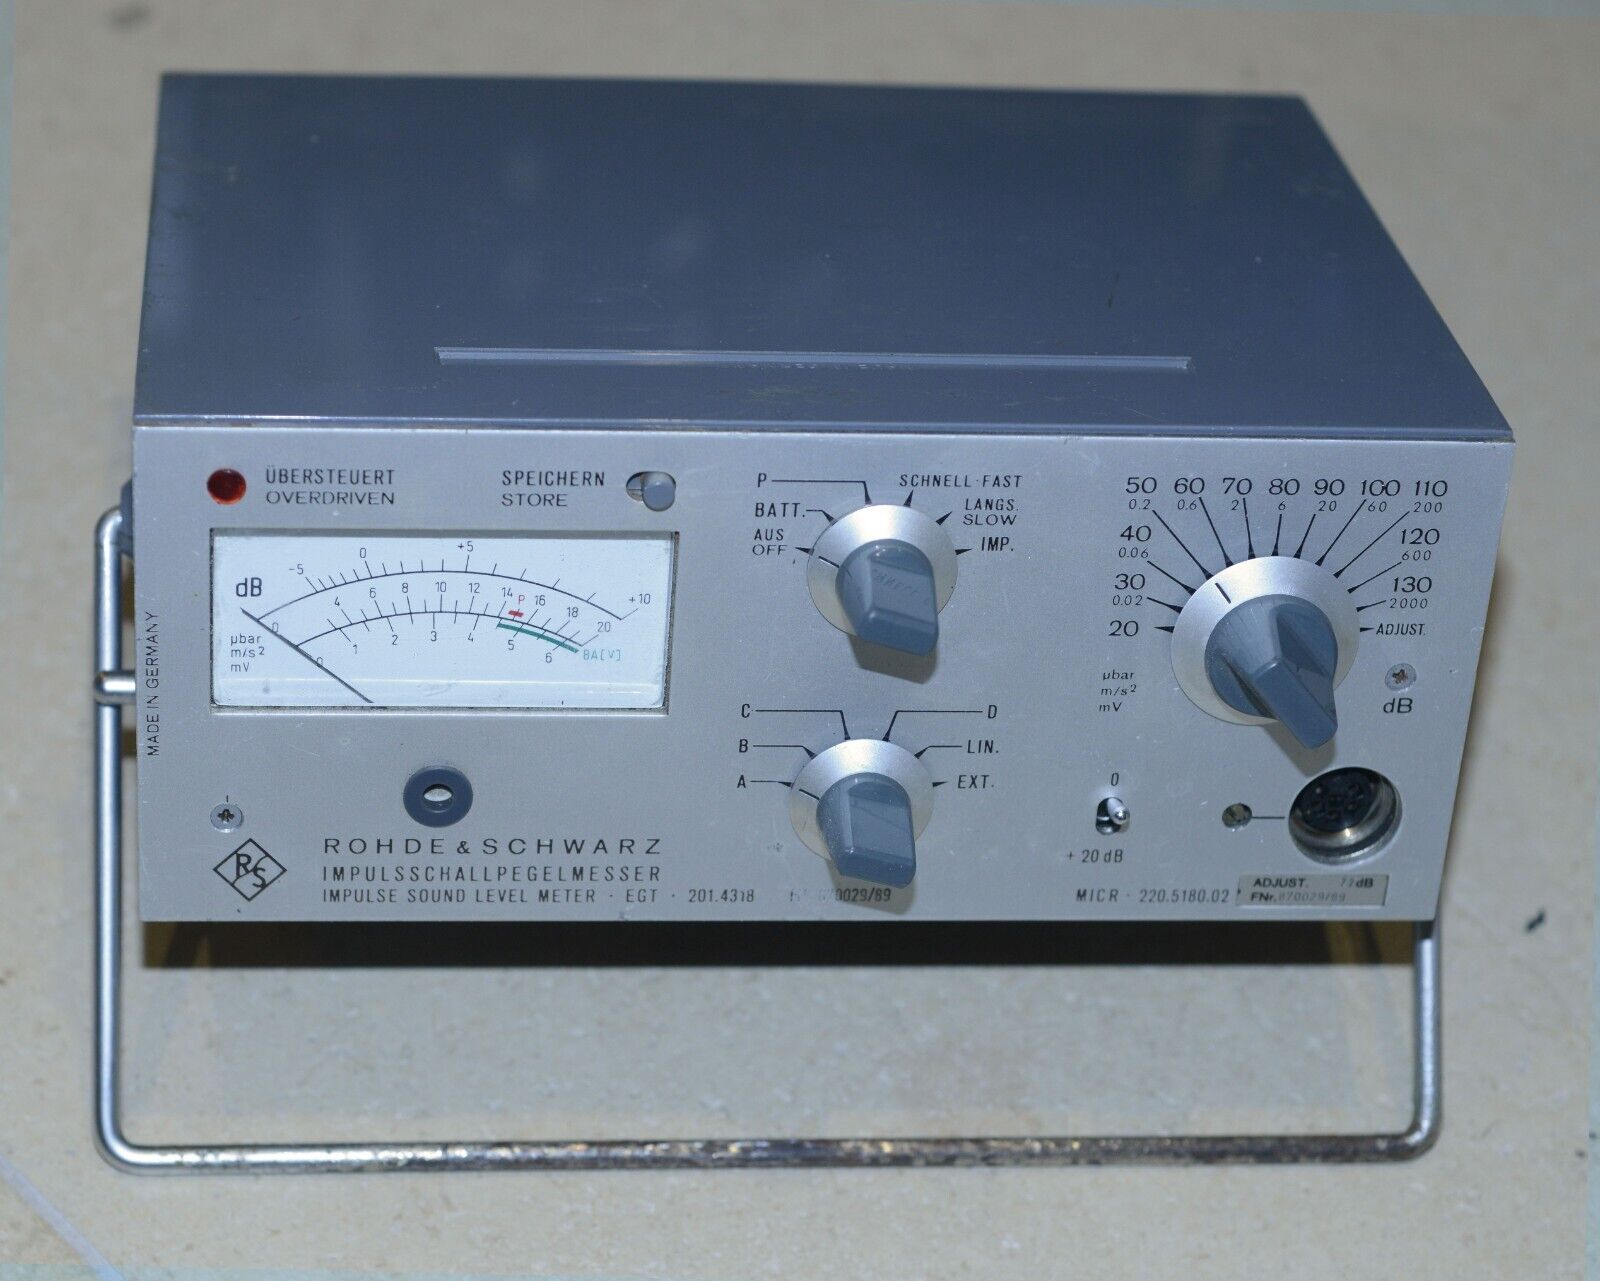 Rohde & Schwarz pulse sound level meter EGT